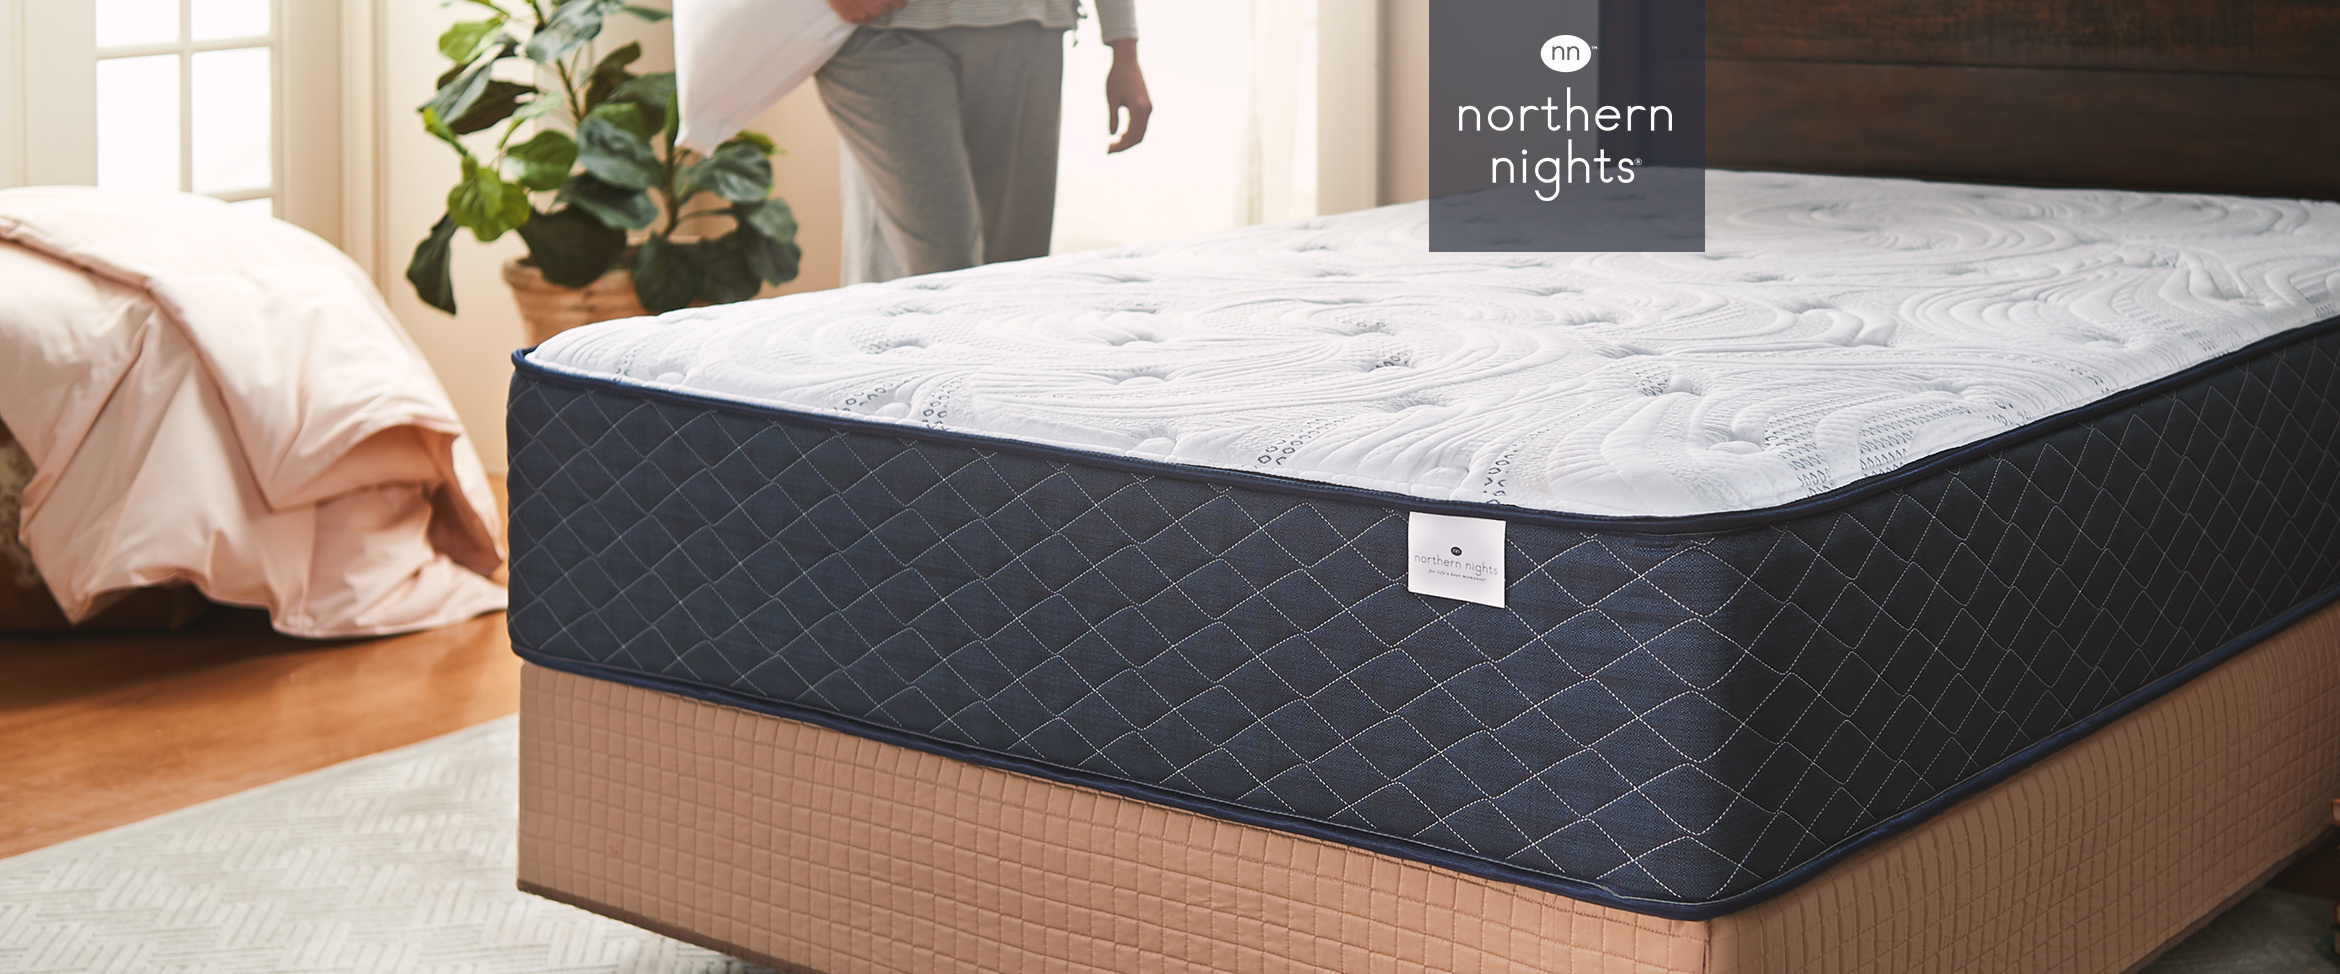 northern nights mattress topper reviews